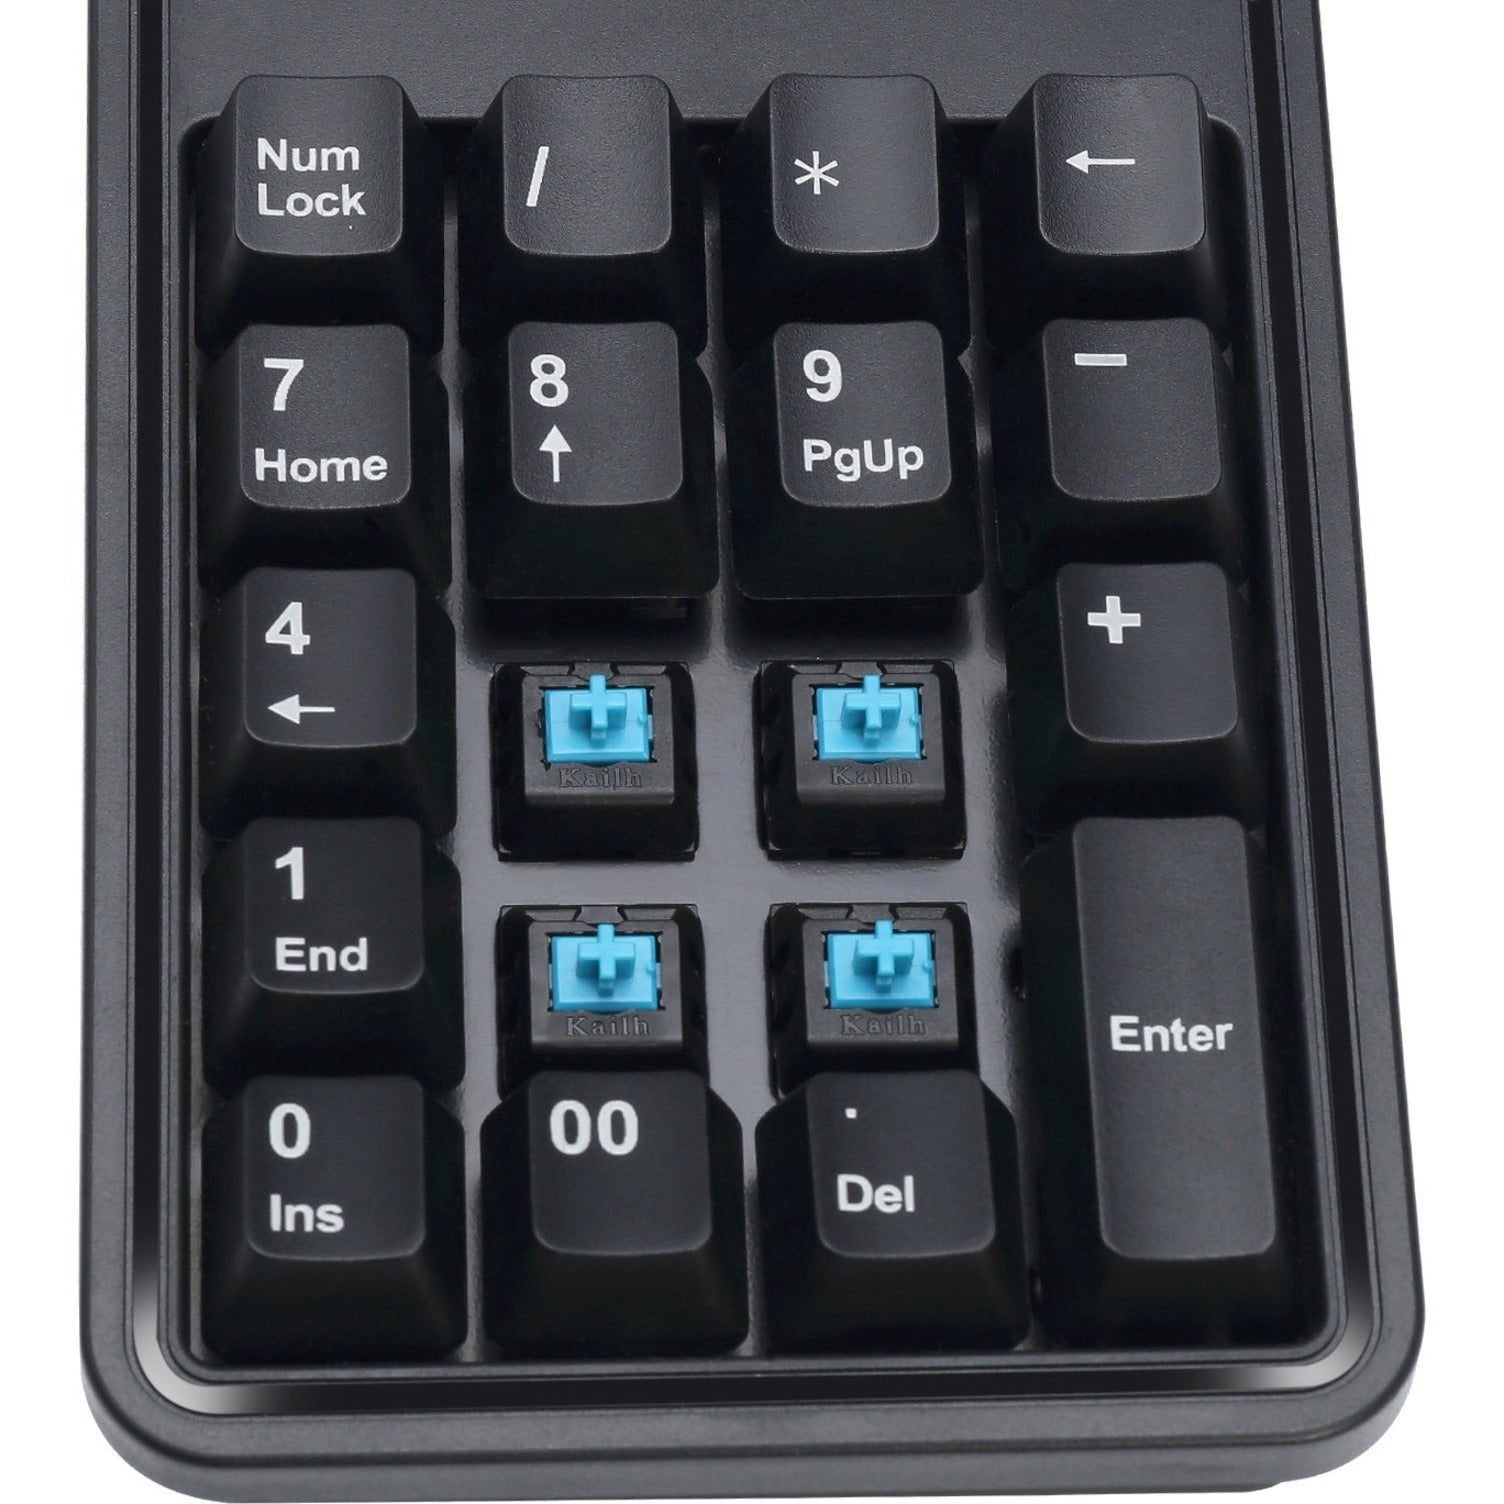 Adesso AKB-600HB 19-Key Mechanical Keypad with 3-Port USB Hub, Adjustable Height, Plug & Play